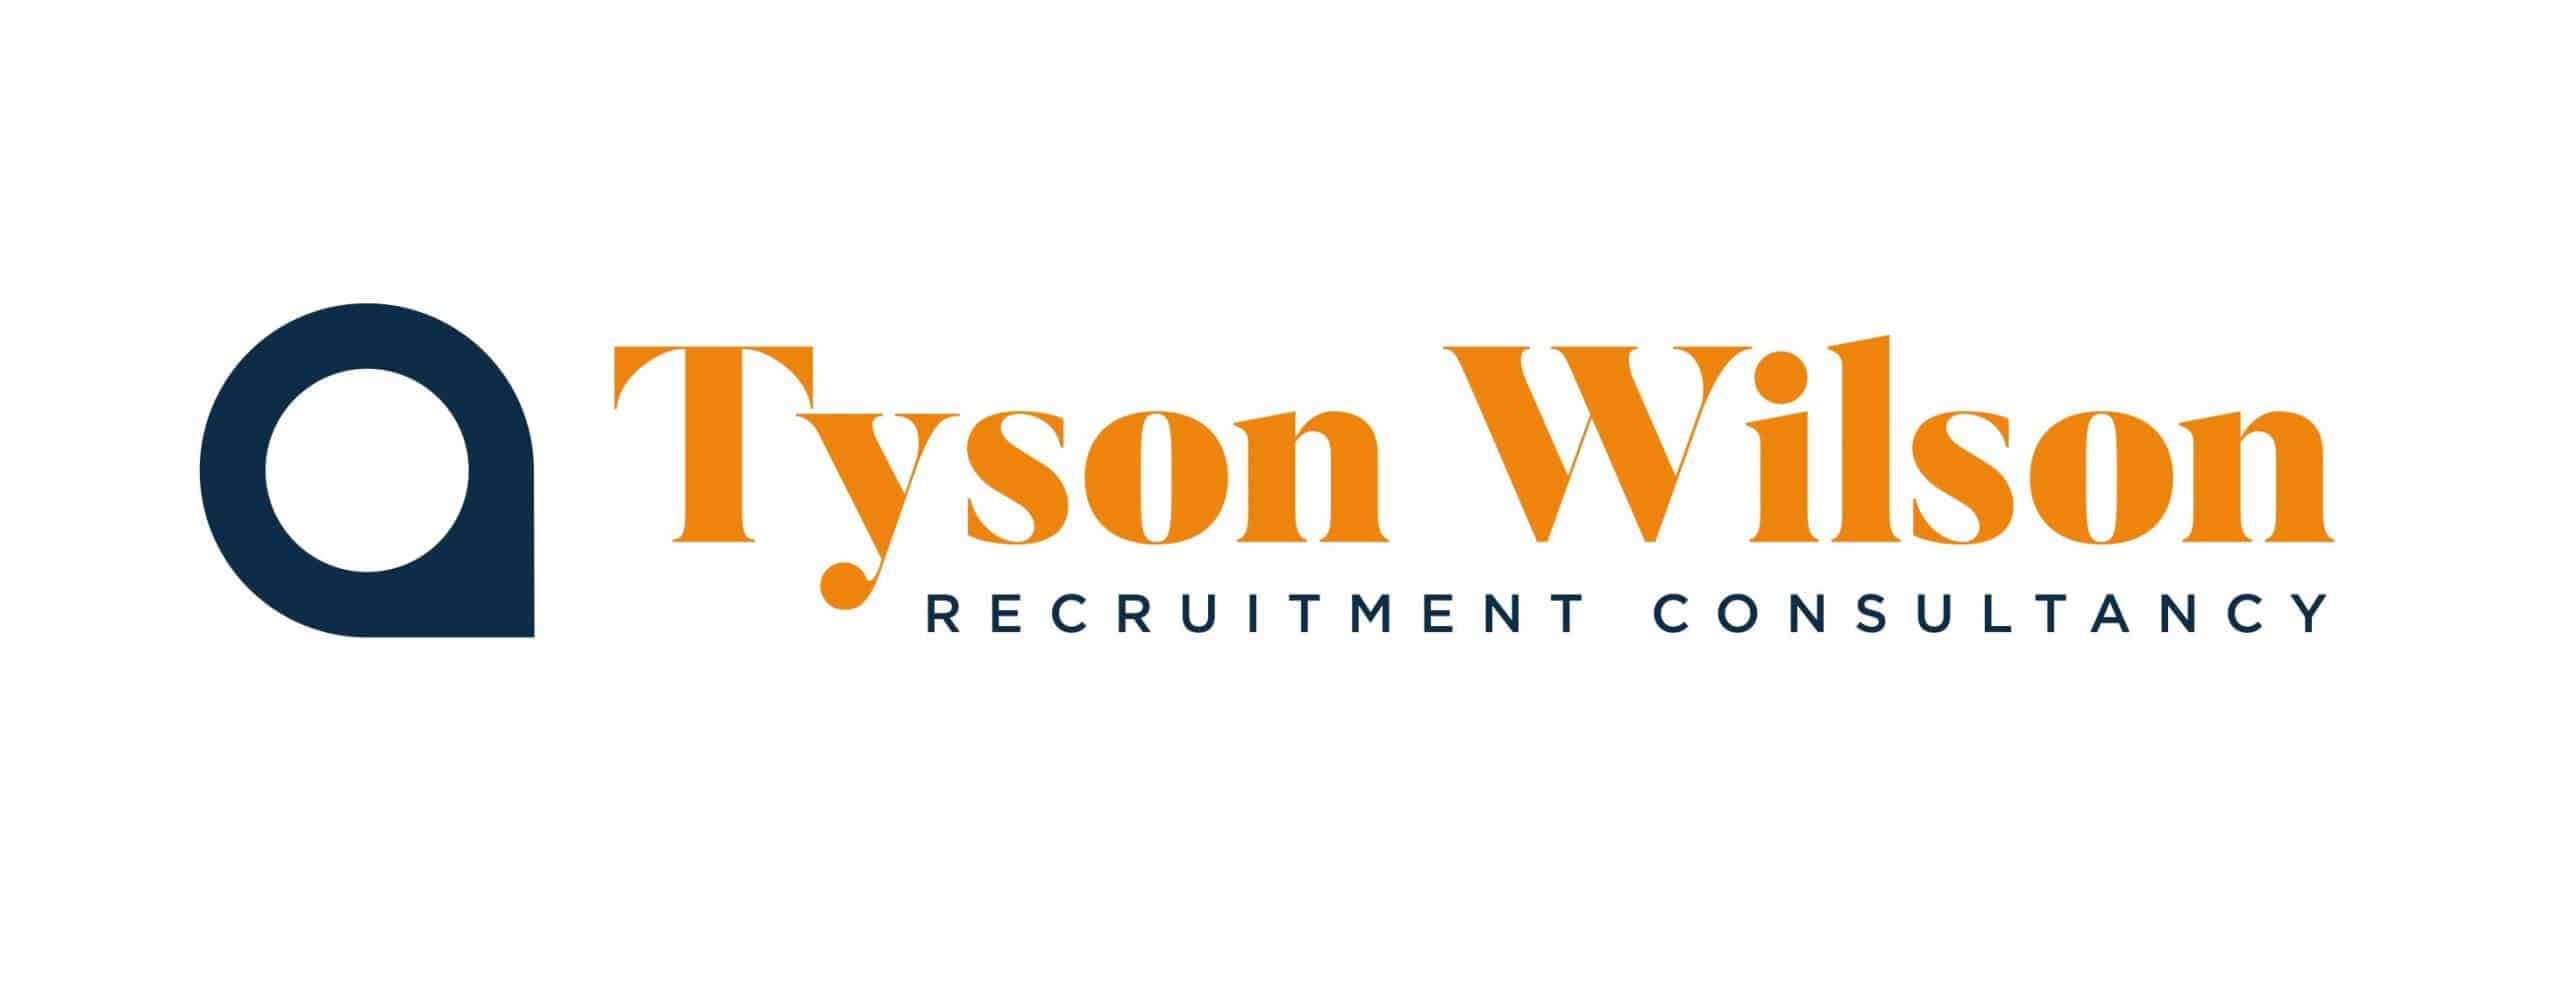 tyson wilson recruitment logo